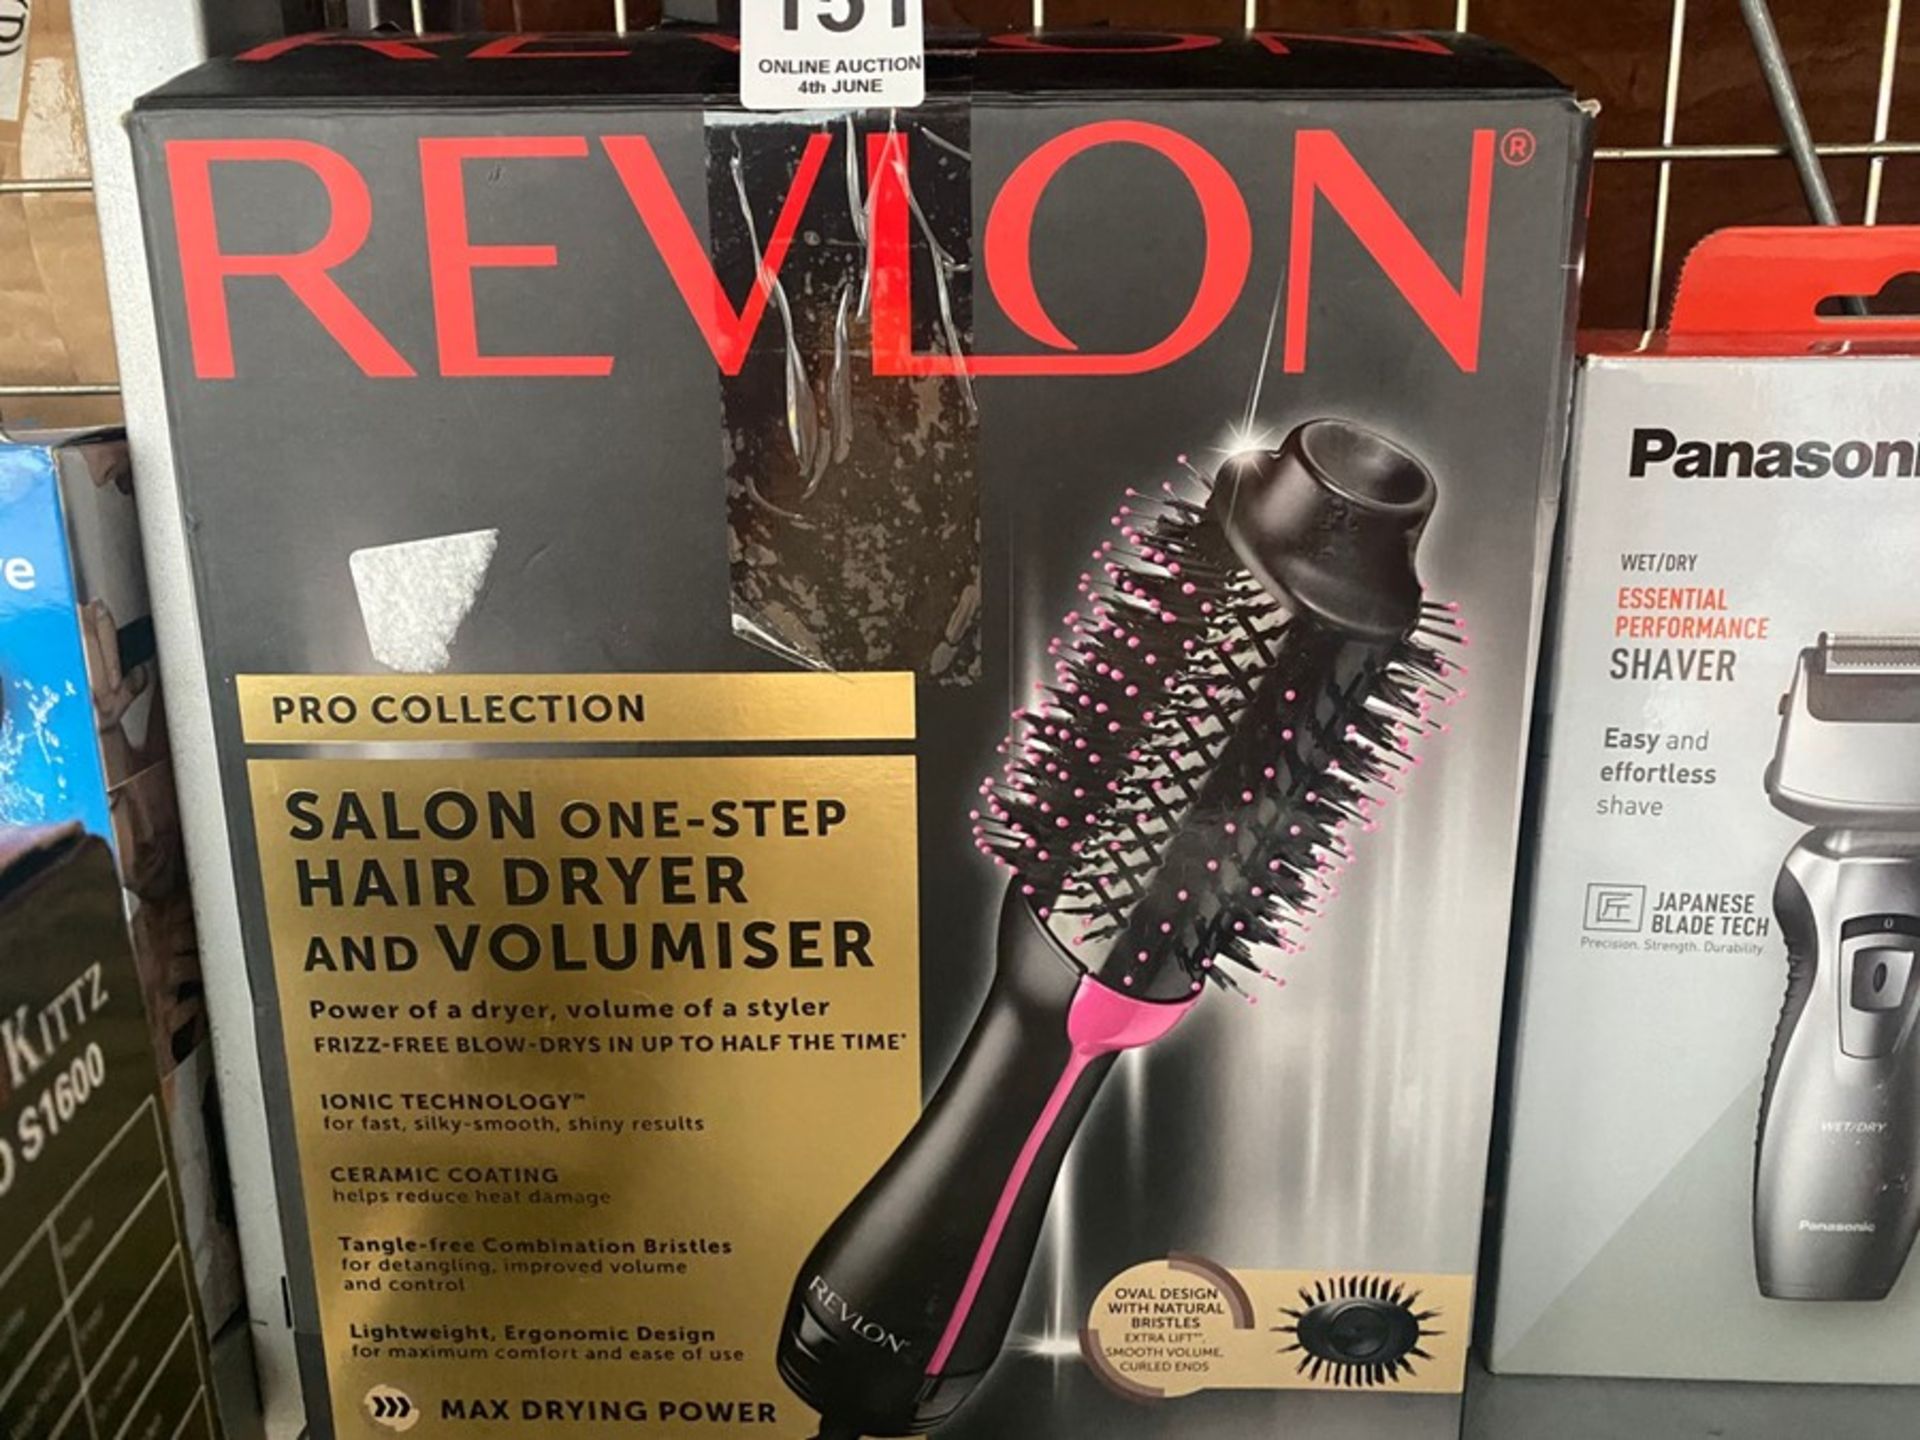 REVLON PRO COLLECTION HAIR DRYER & VOLUMISER